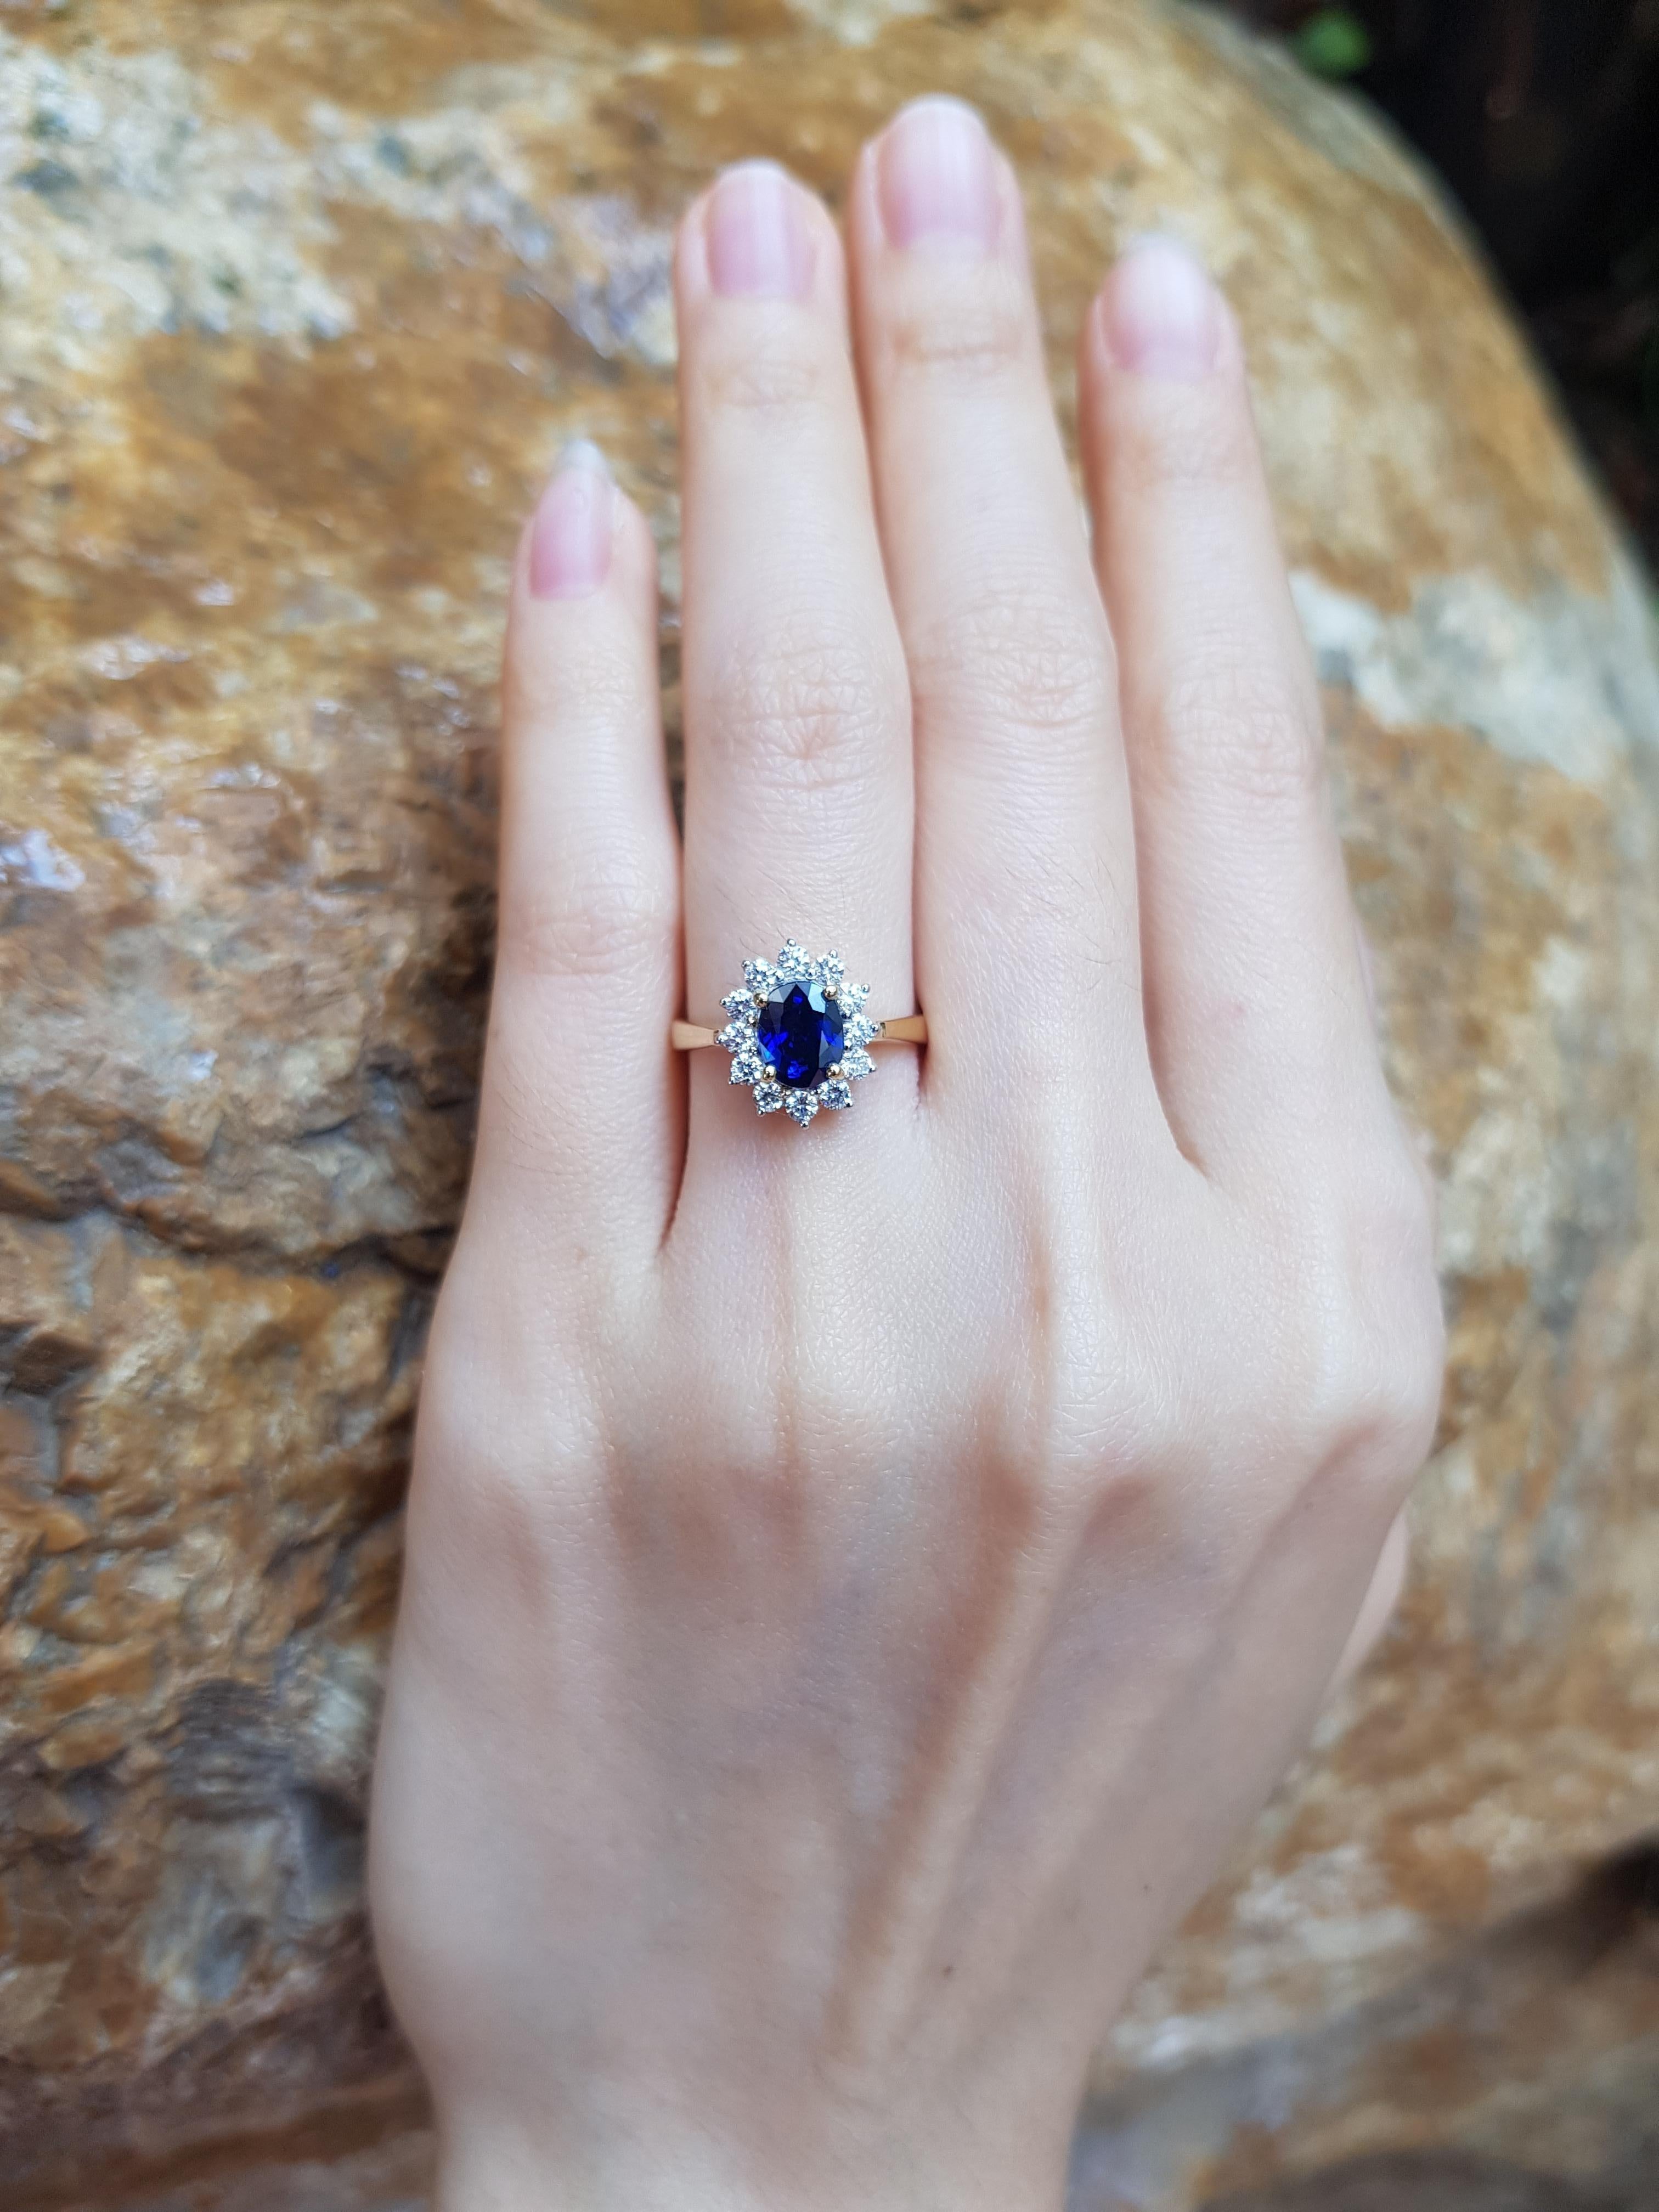 Blue Sapphire 1.11 carats with Diamond 0.37 carat Ring set in 18 Karat Gold Settings

Width: 1.0 cm
Length: 1.2 cm 
Ring Size: 49

